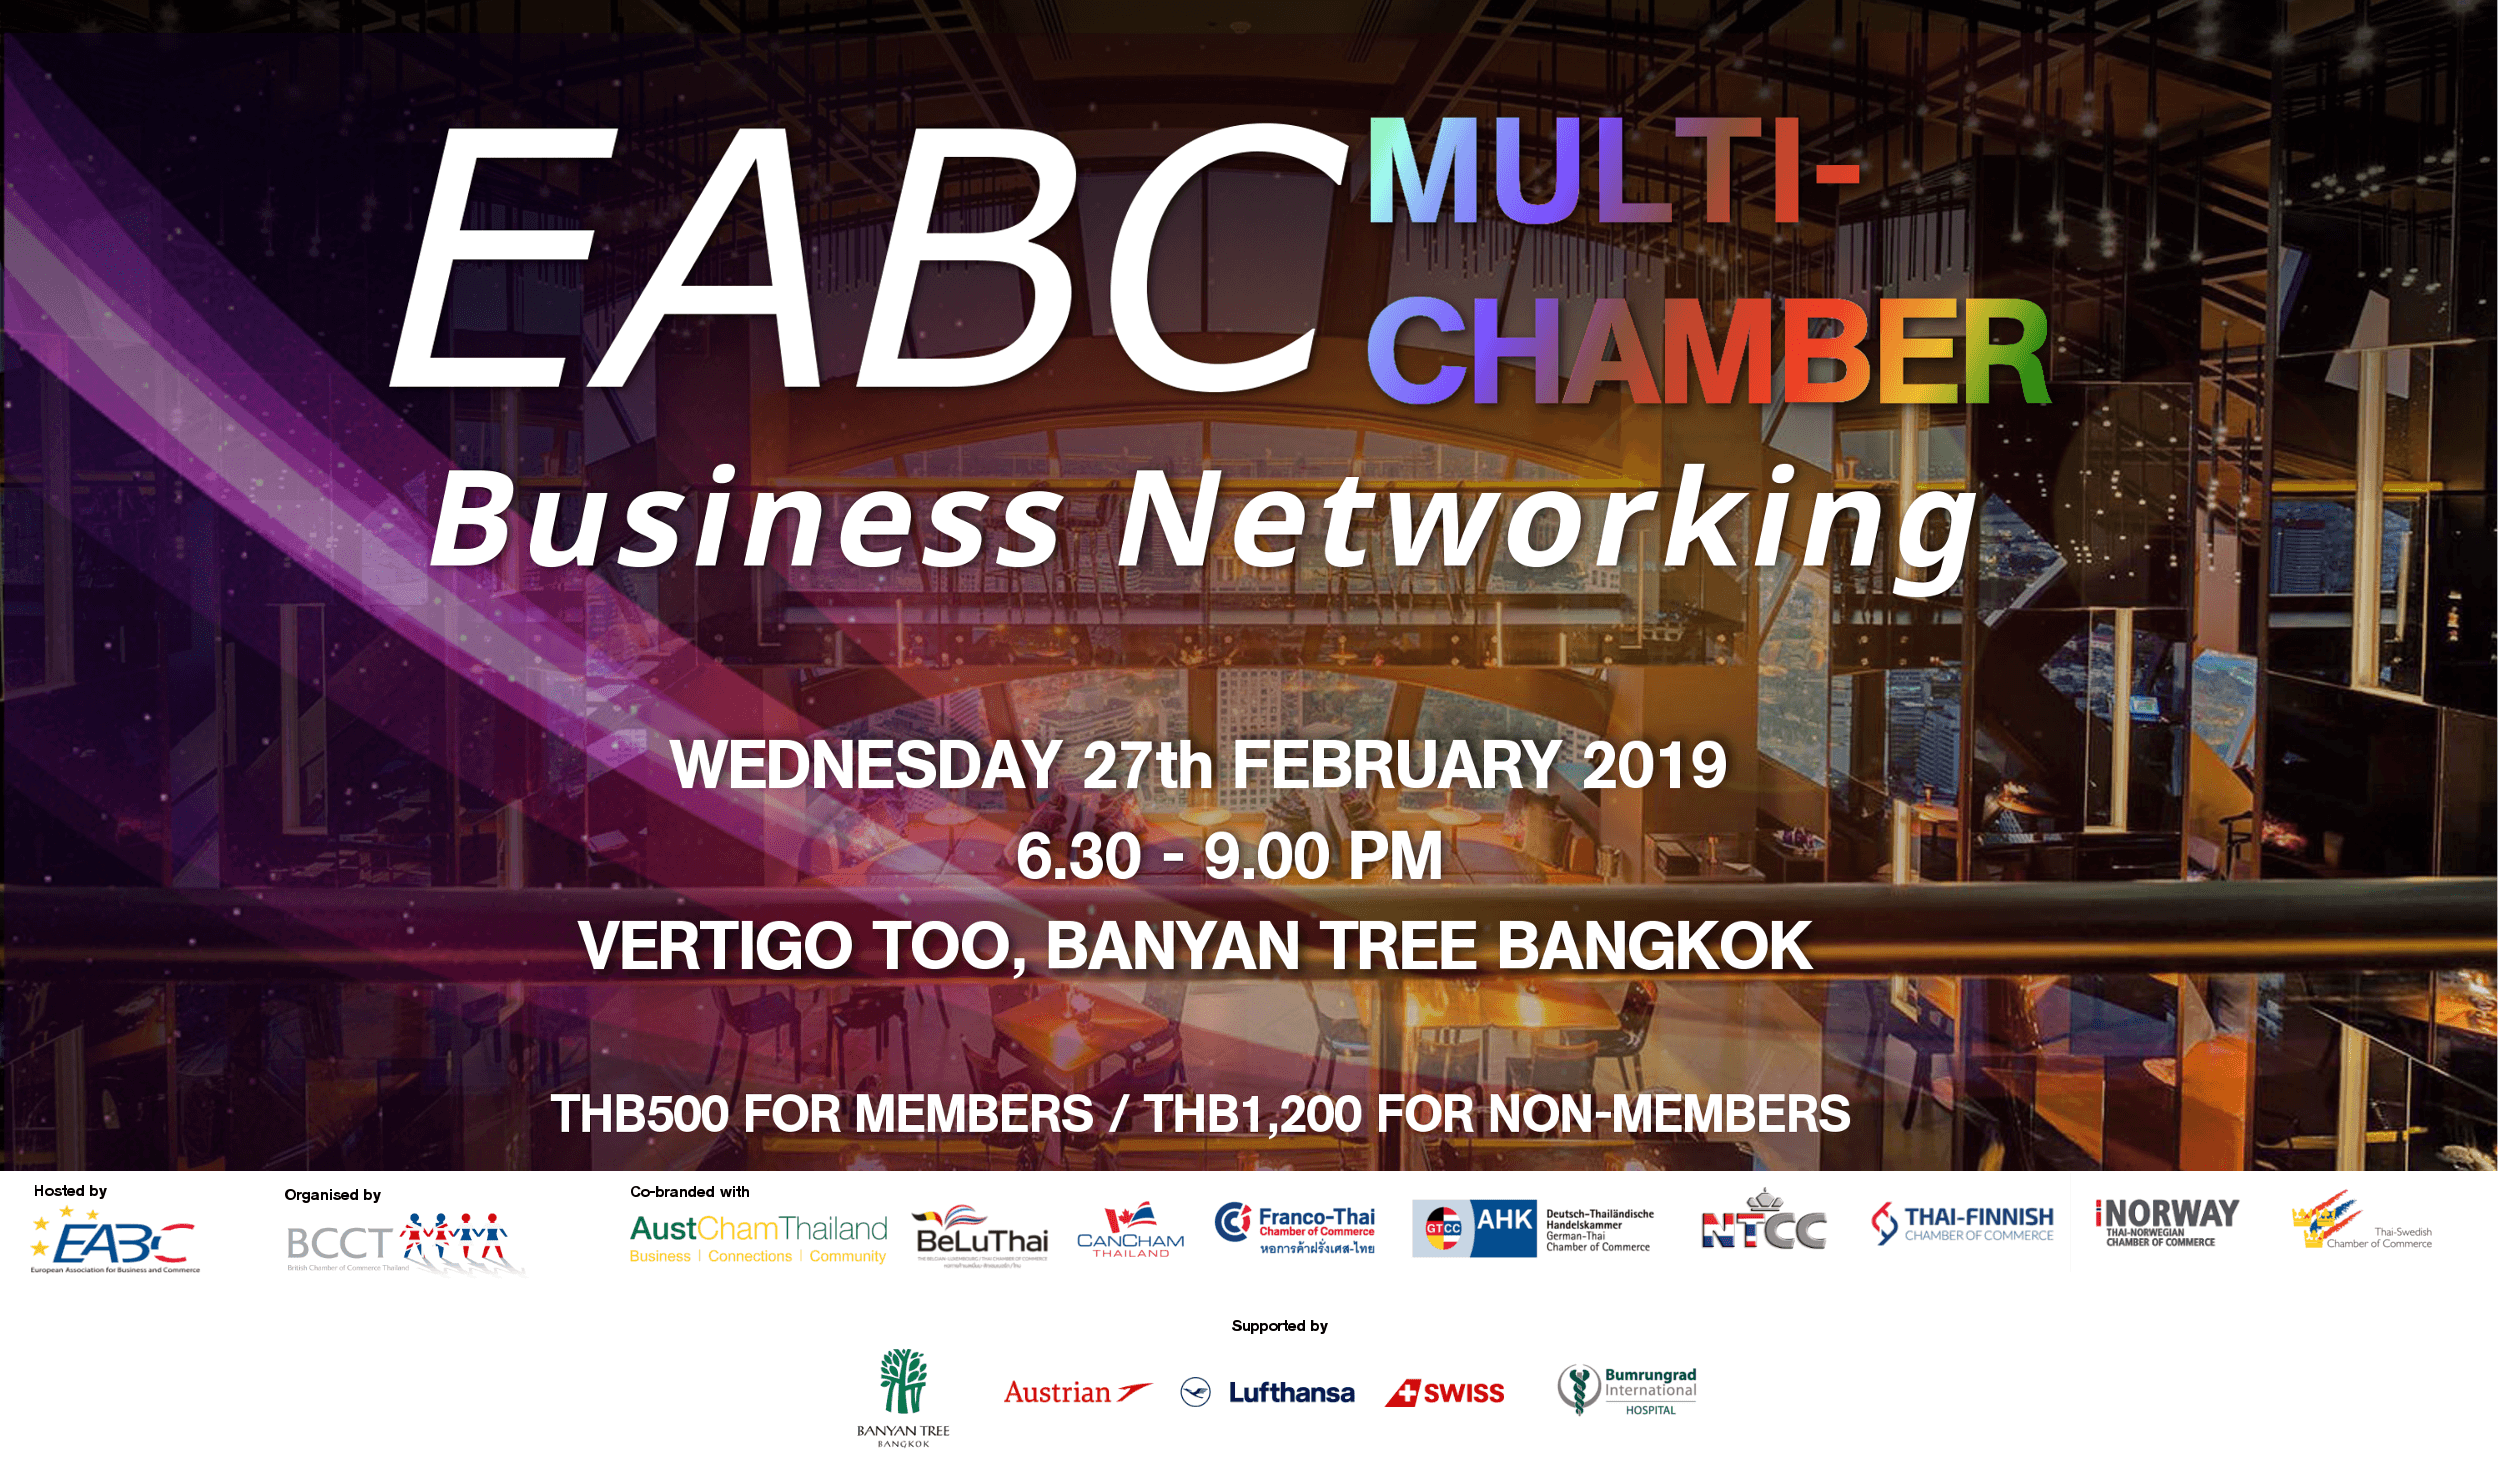 27/2 - EABC MULTI-CHAMBER BUSINESS NETWORKING